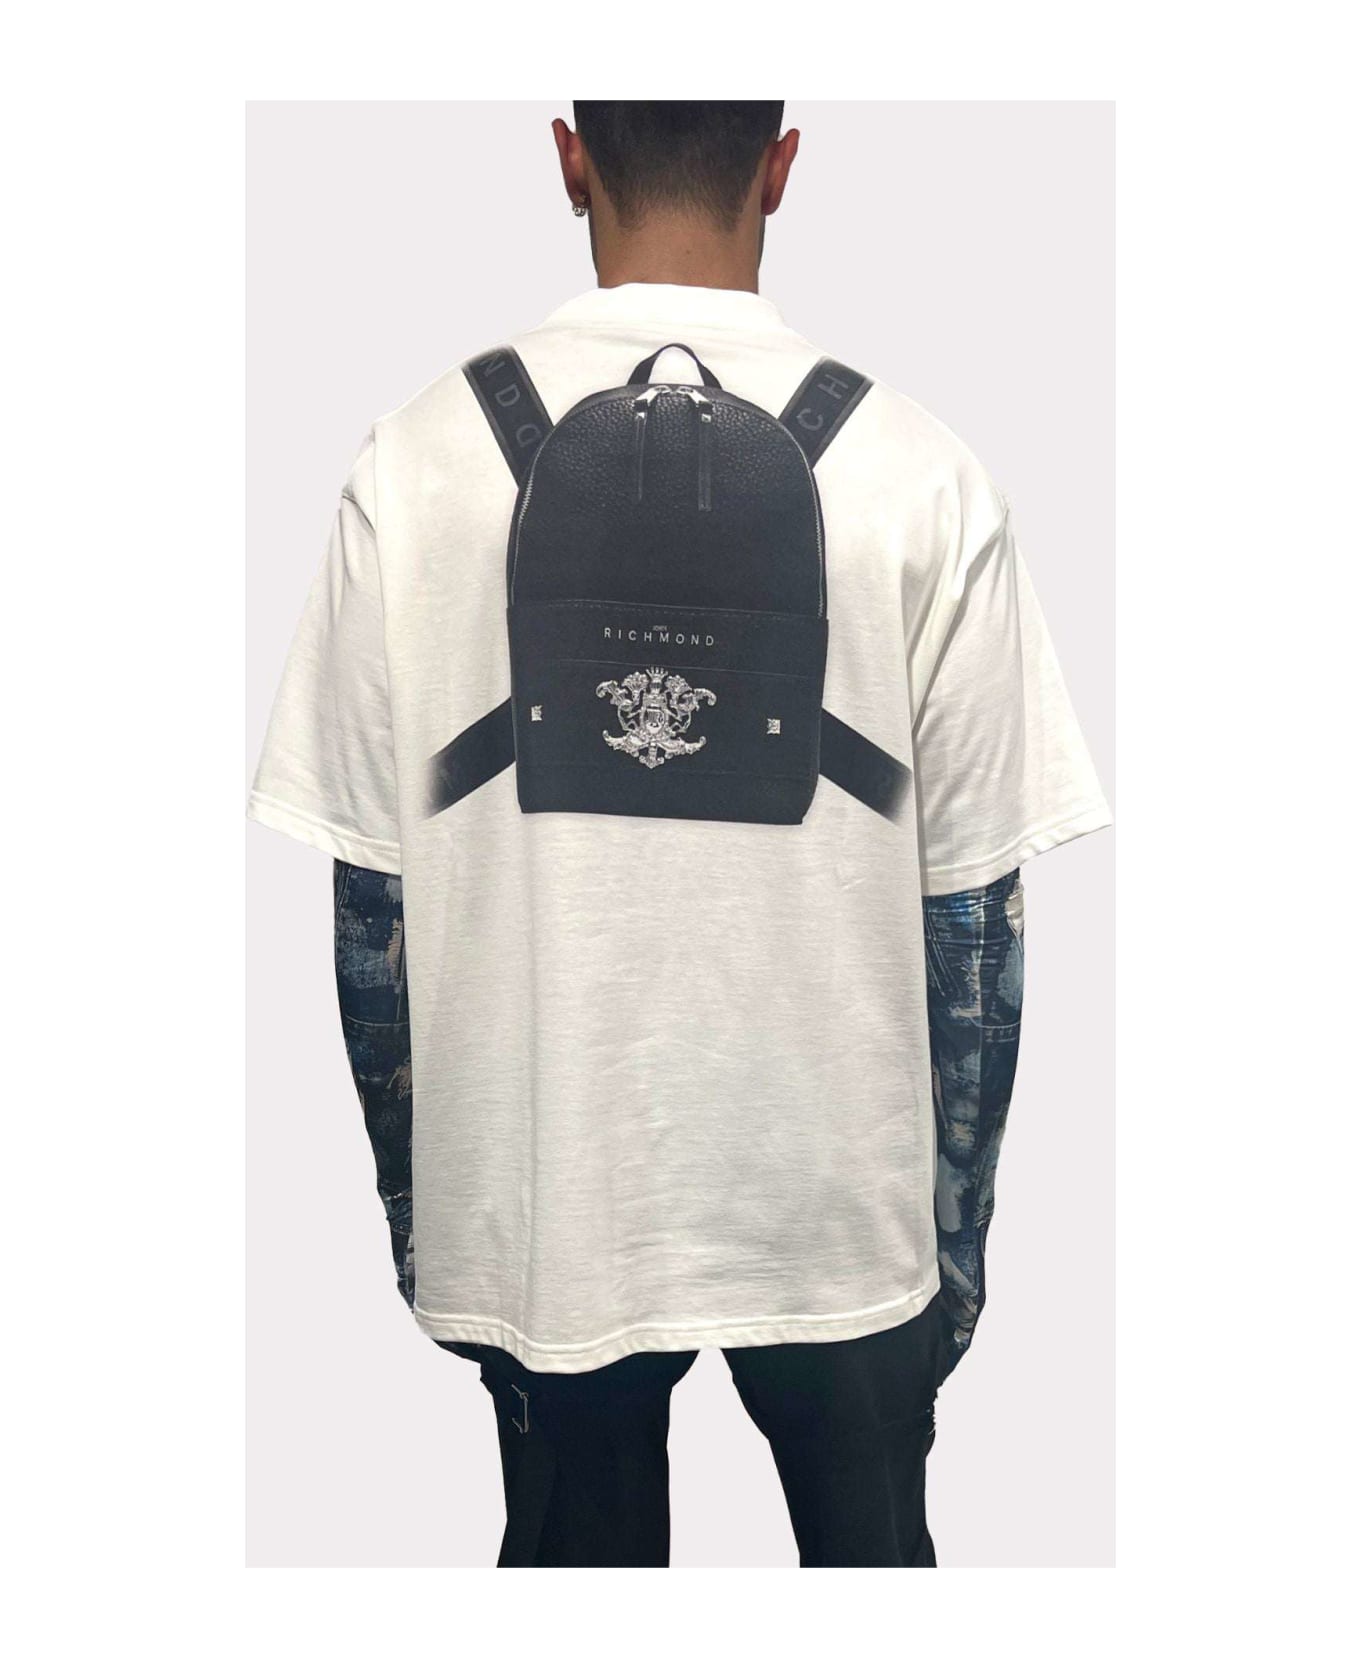 John Richmond 100% Cotton T-shirt With Heat Pressed Print On The Back. - Bianco シャツ